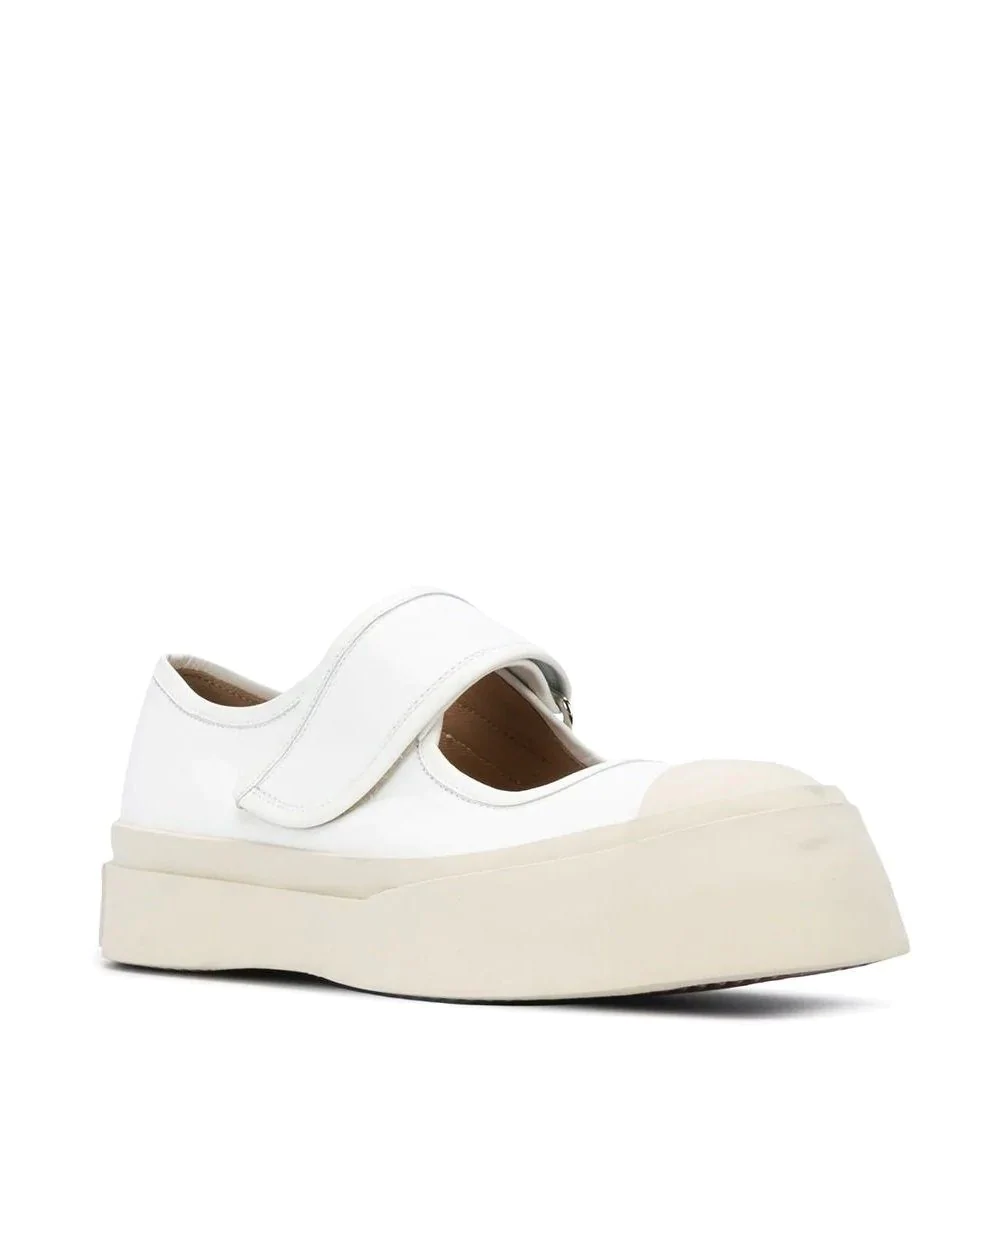 Marni Pablo Touch-Strap Sneakers, White